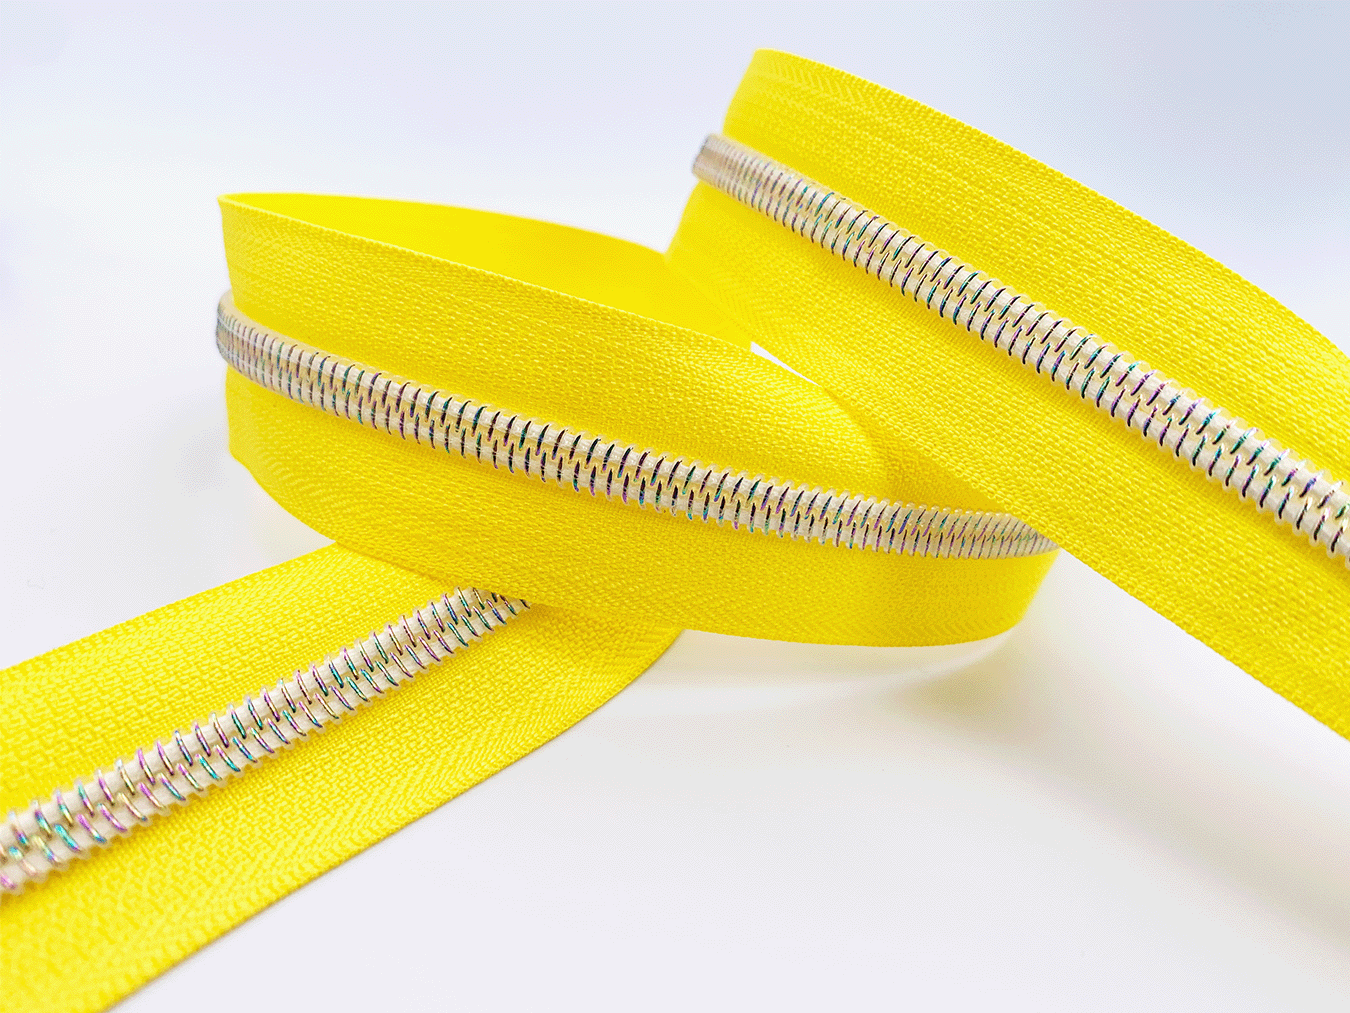 Sunshine Yellow Zipper Tape with White Iridescent Rainbow Teeth, Arctic Ice Collection, for #5 nylon zips